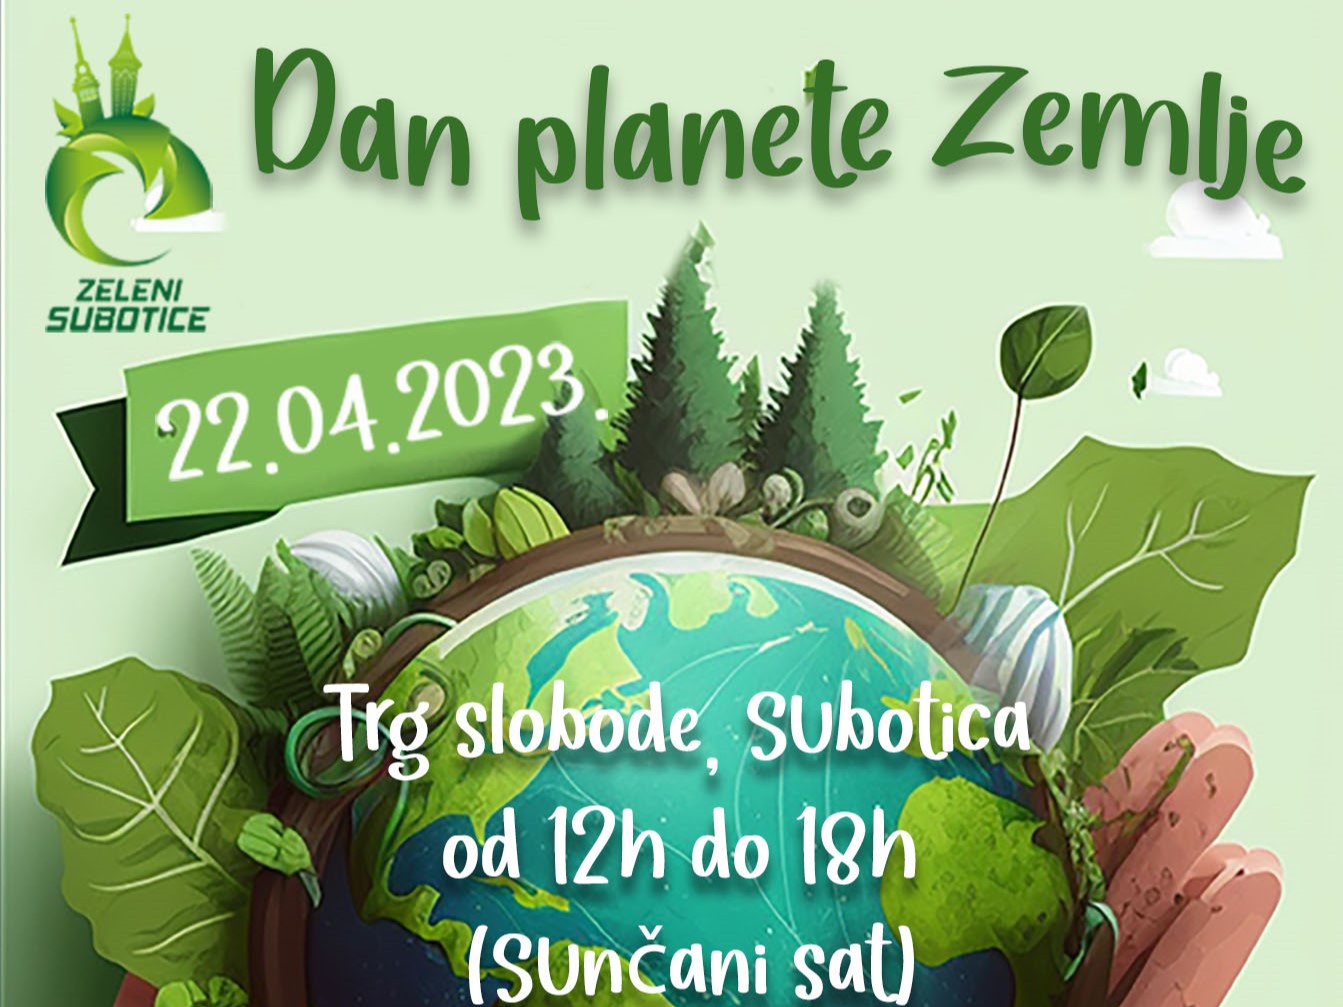 “Zeleni Subotice” obeležavaju Dan planete Zemlje